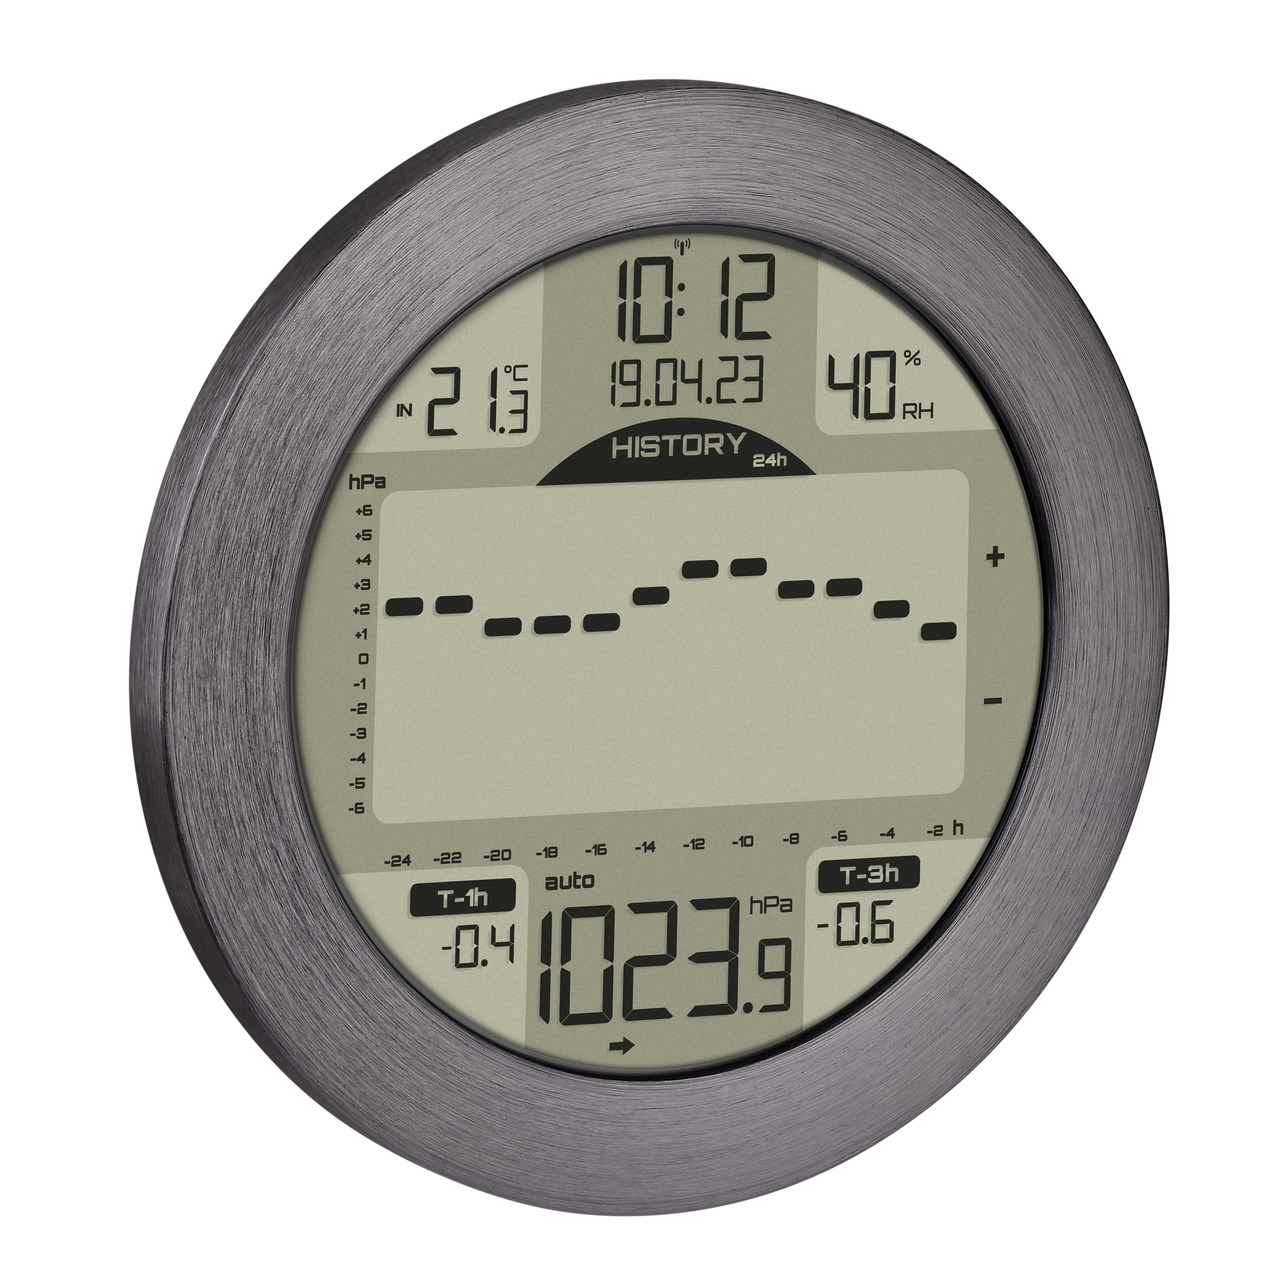 TFA Wetterstation METEOMAR- Luftdruck-Histogramm- Aluminium-Rahmen- Funkuhr-Datum unter Klima - Wetter - Umwelt